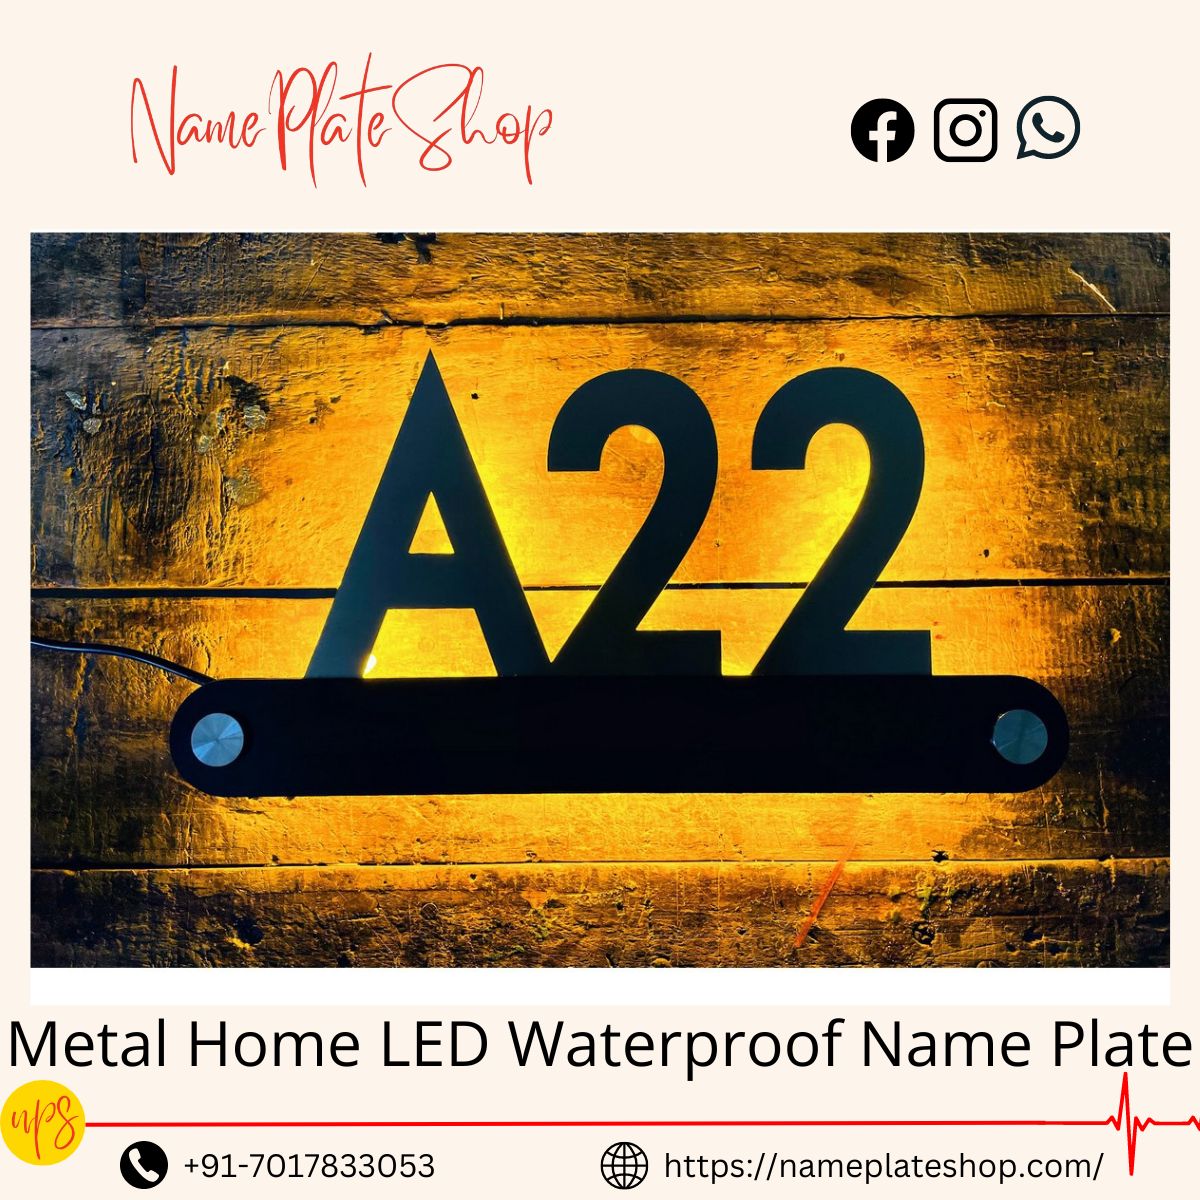 Discover Durable Metal Nameplates at NameplateShop